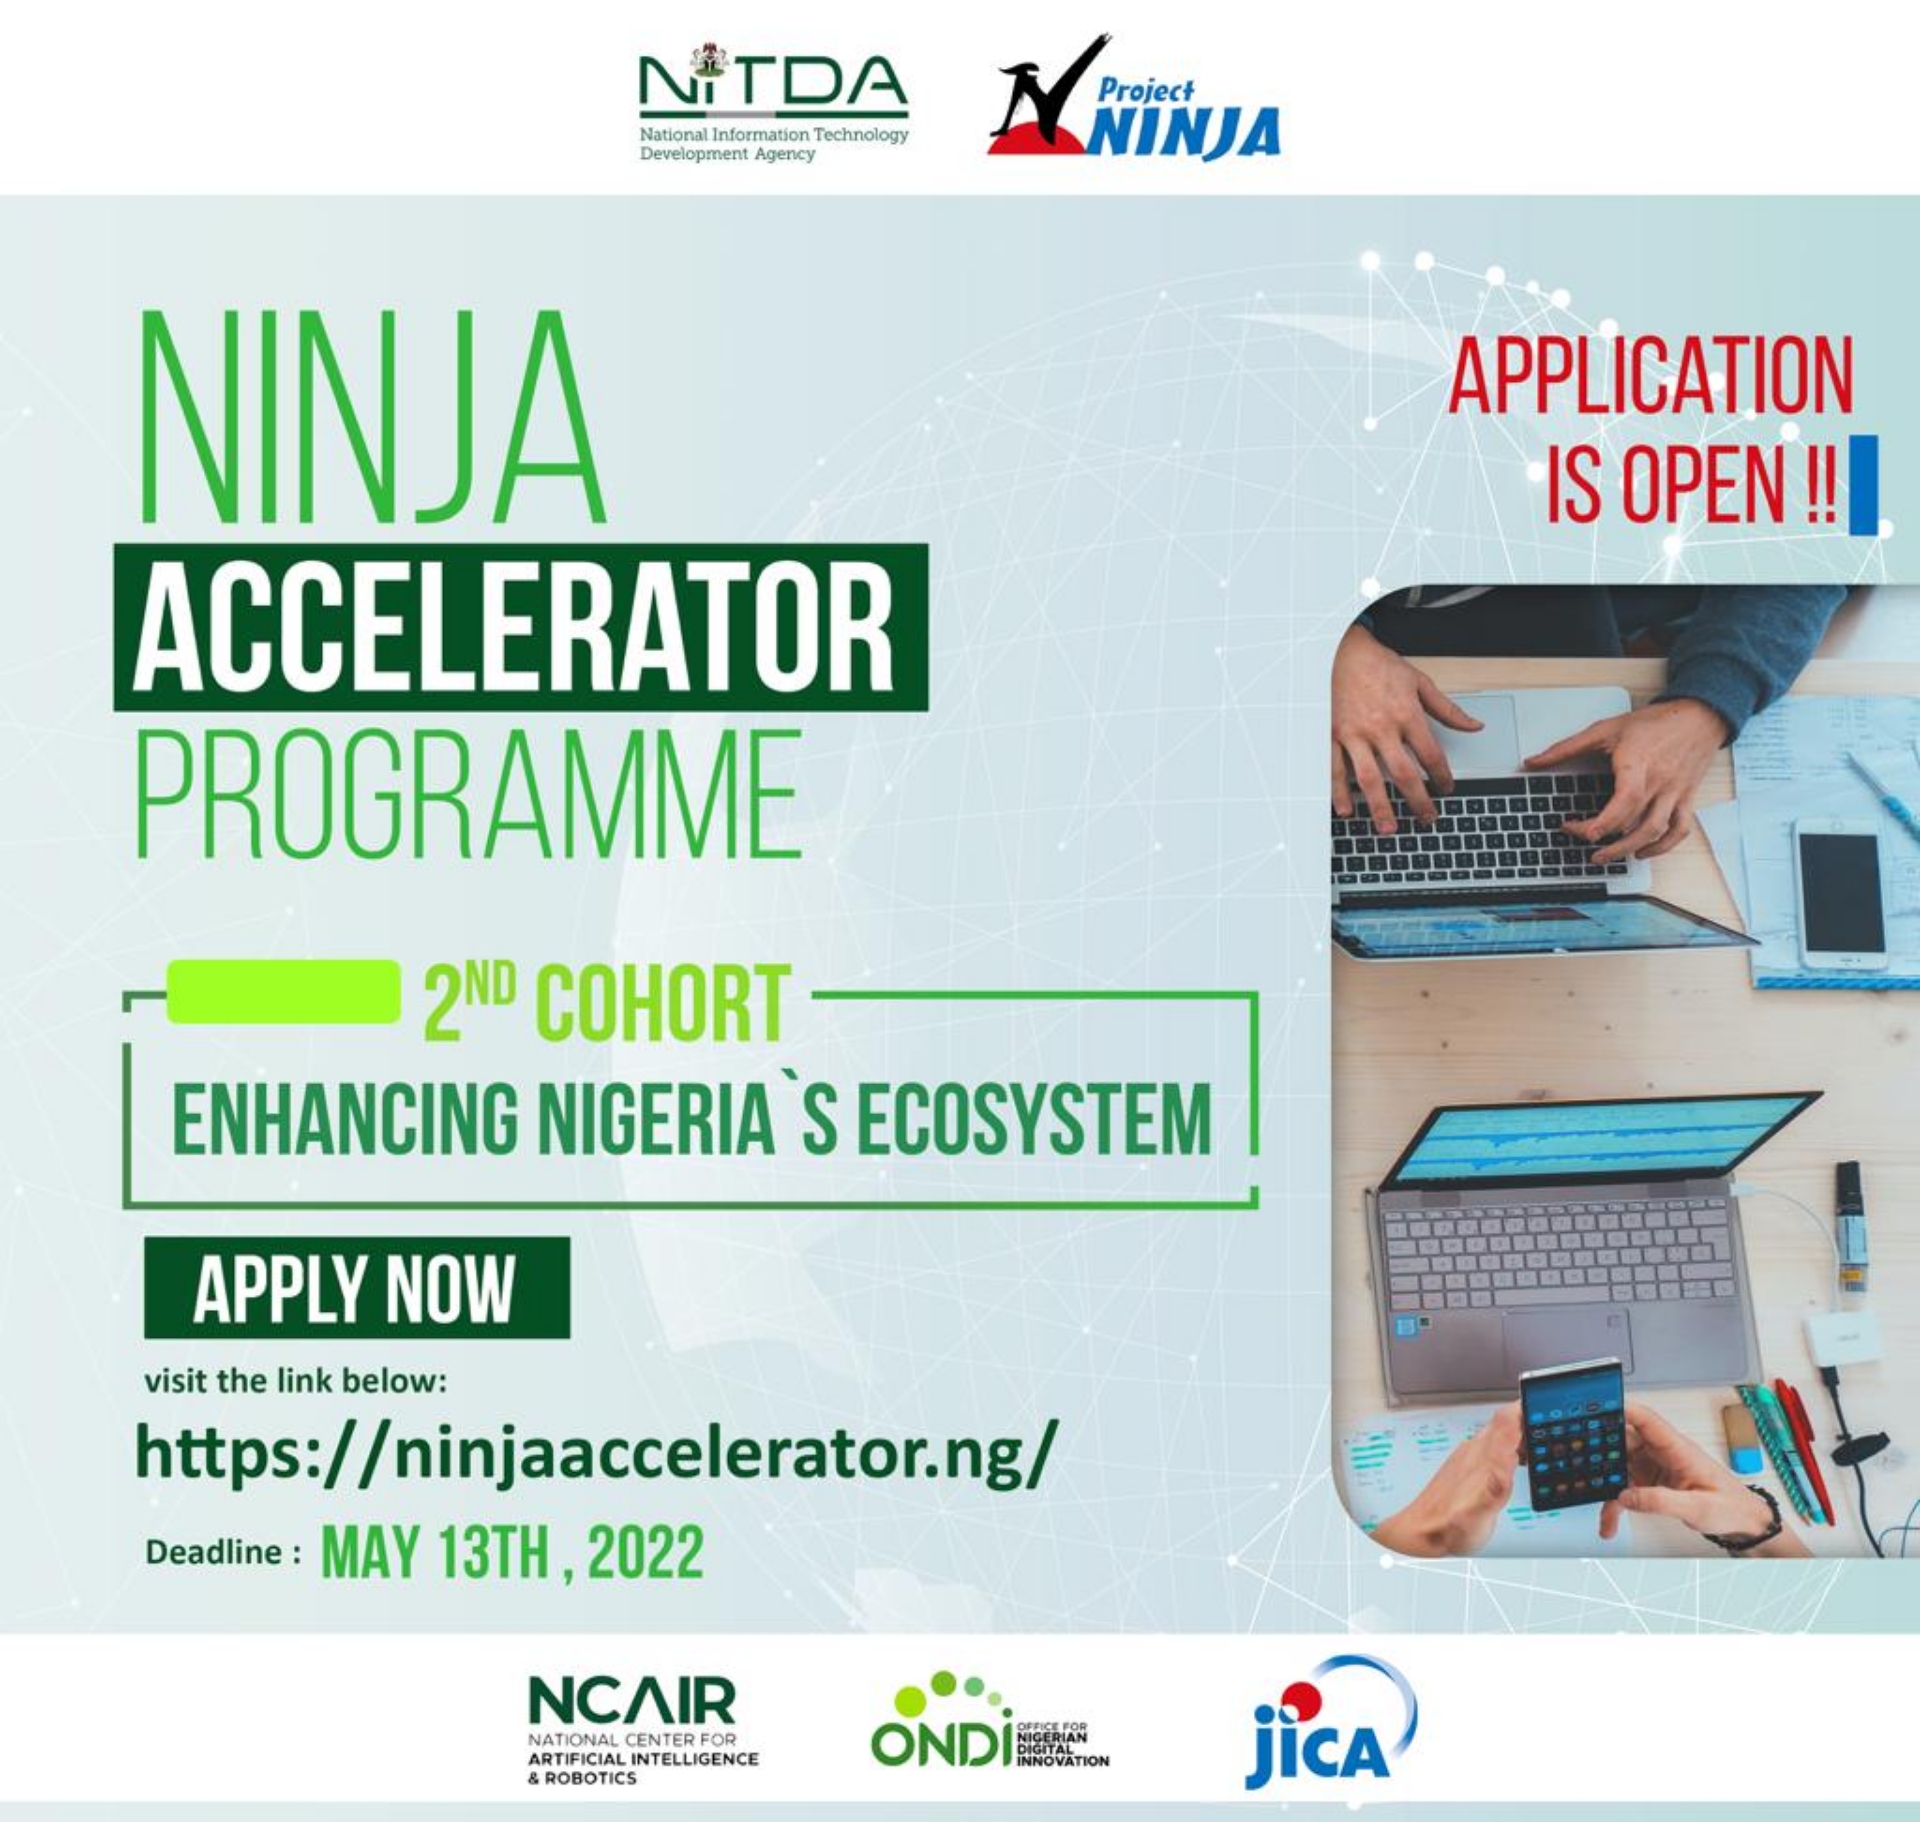 NINJA Accelerator Program in Nigeria 2nd Cohort (How To Apply)